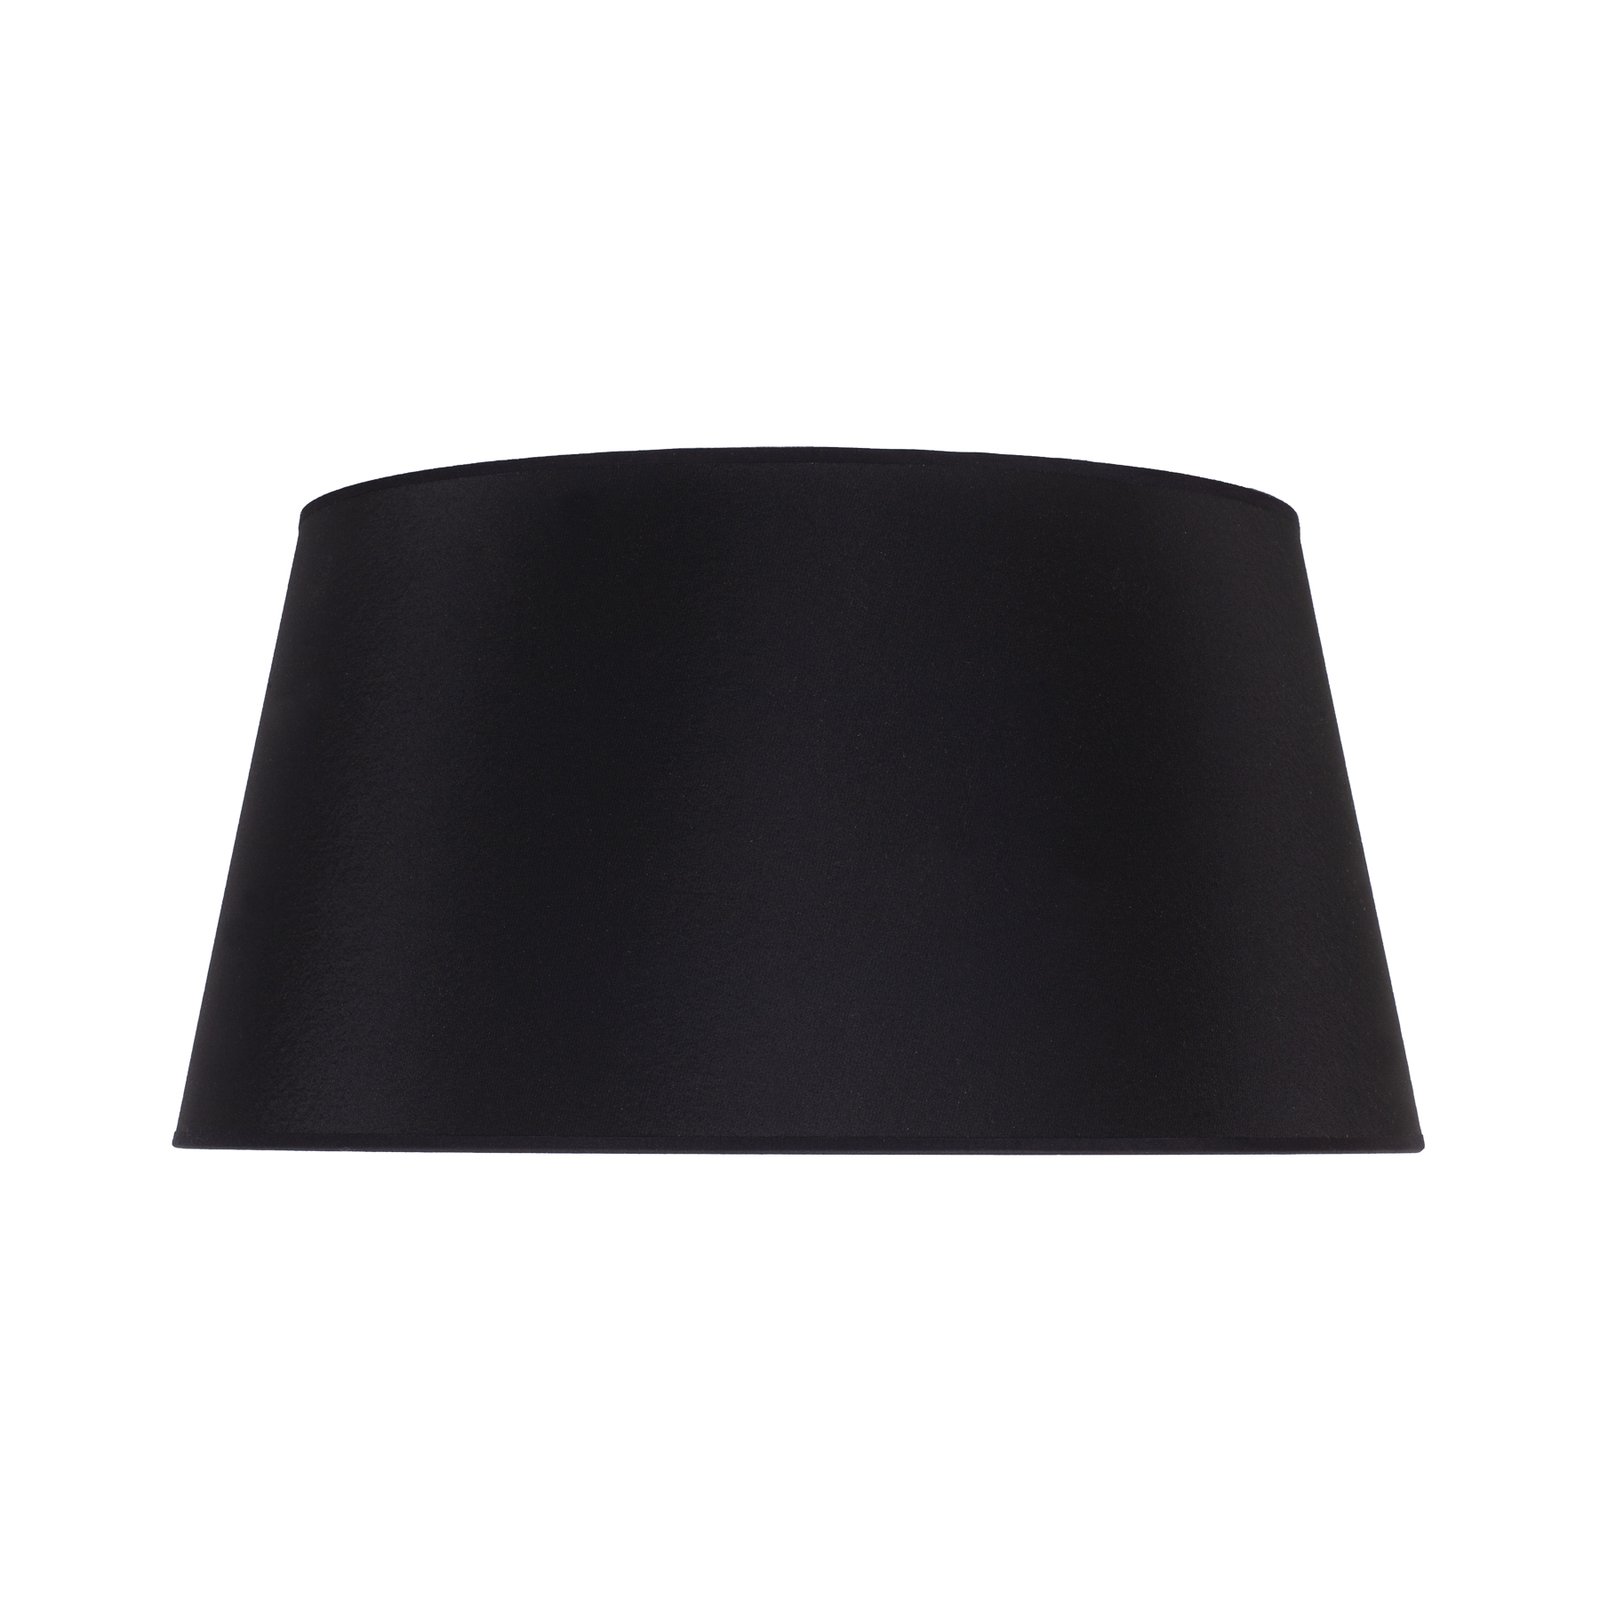 Cone lampshade height 25.5 cm, black chintz